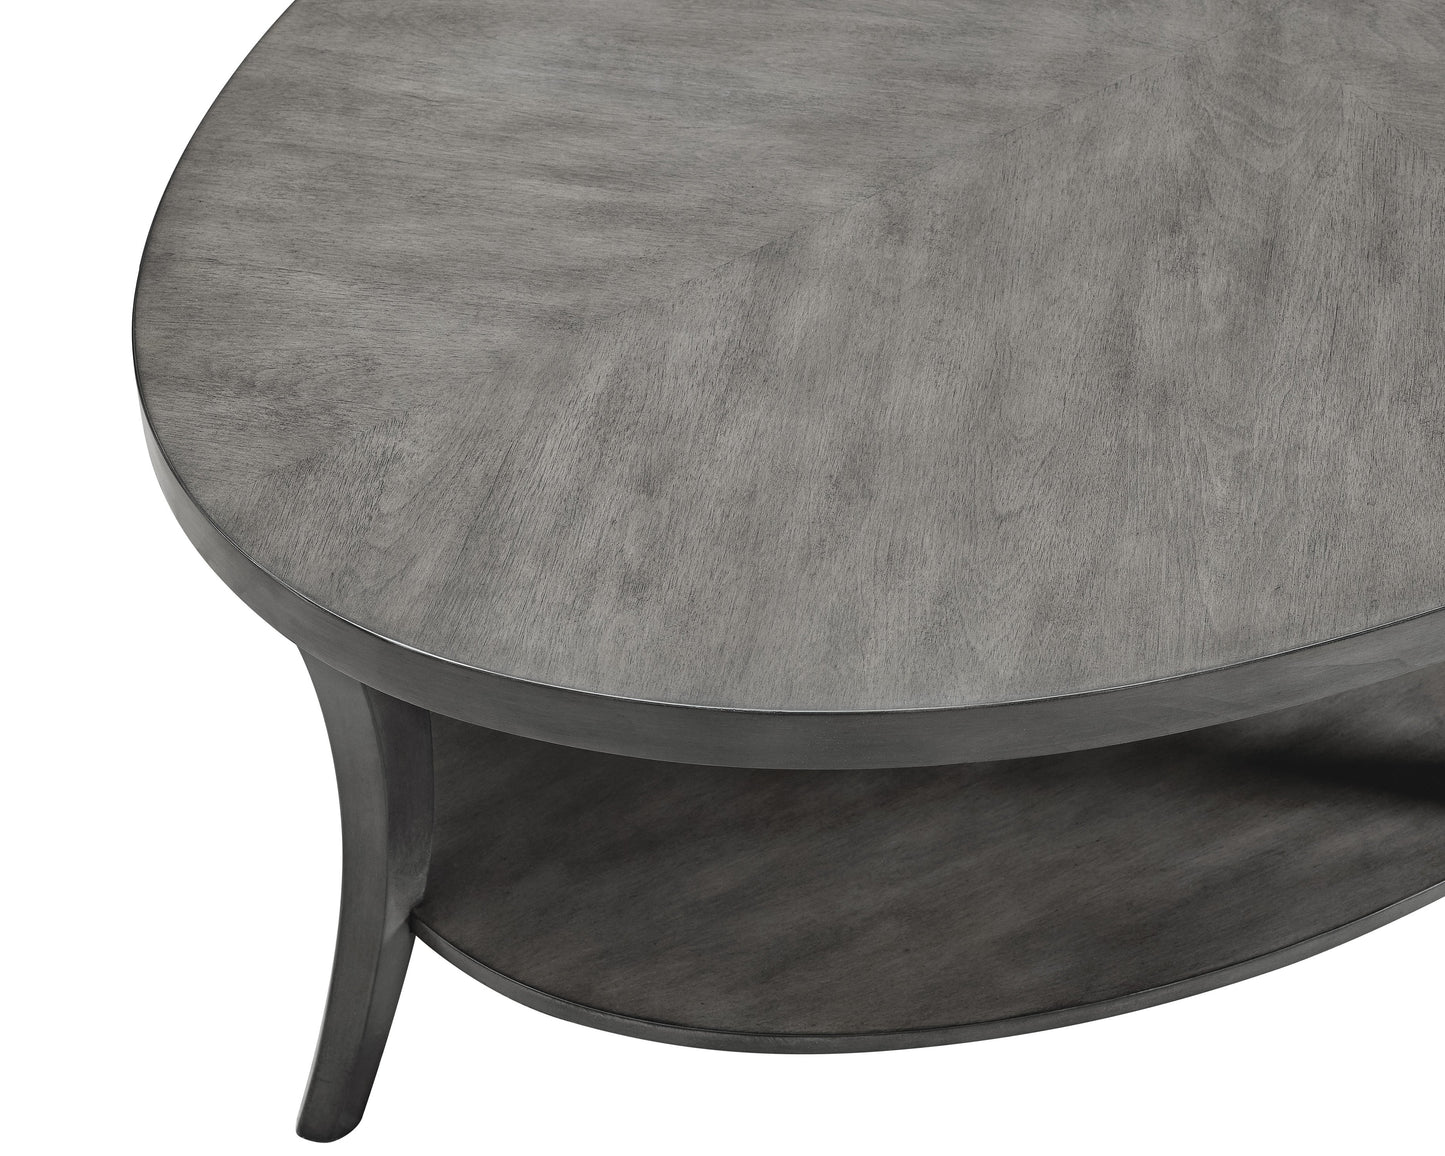 Perth Contemporary Oval Shelf Coffee Table, Gray